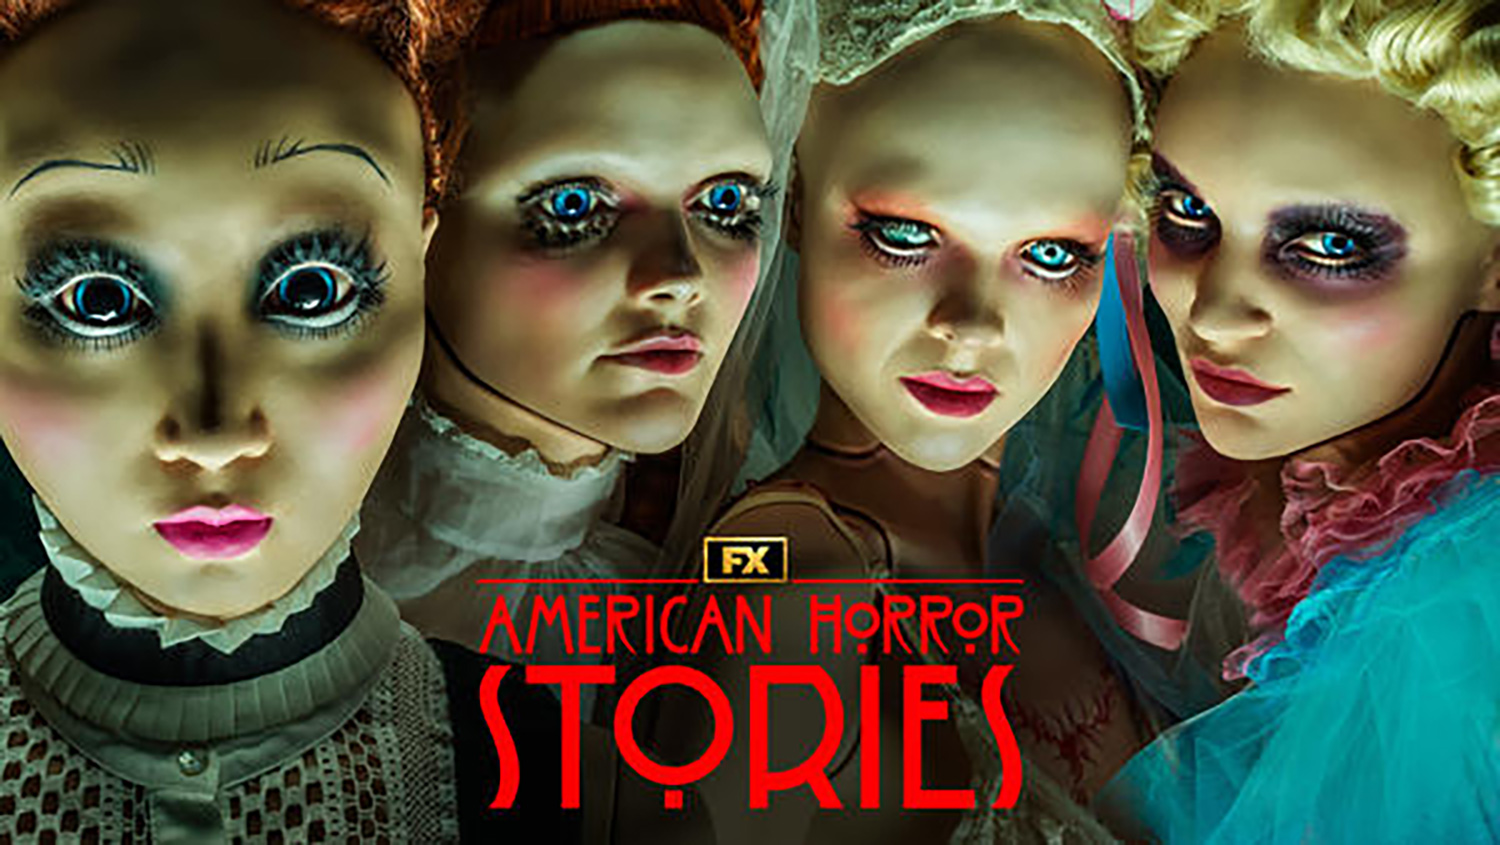 American Horror Story AHS Complete TV Series Seasons 16 (1 6) NEW DVD